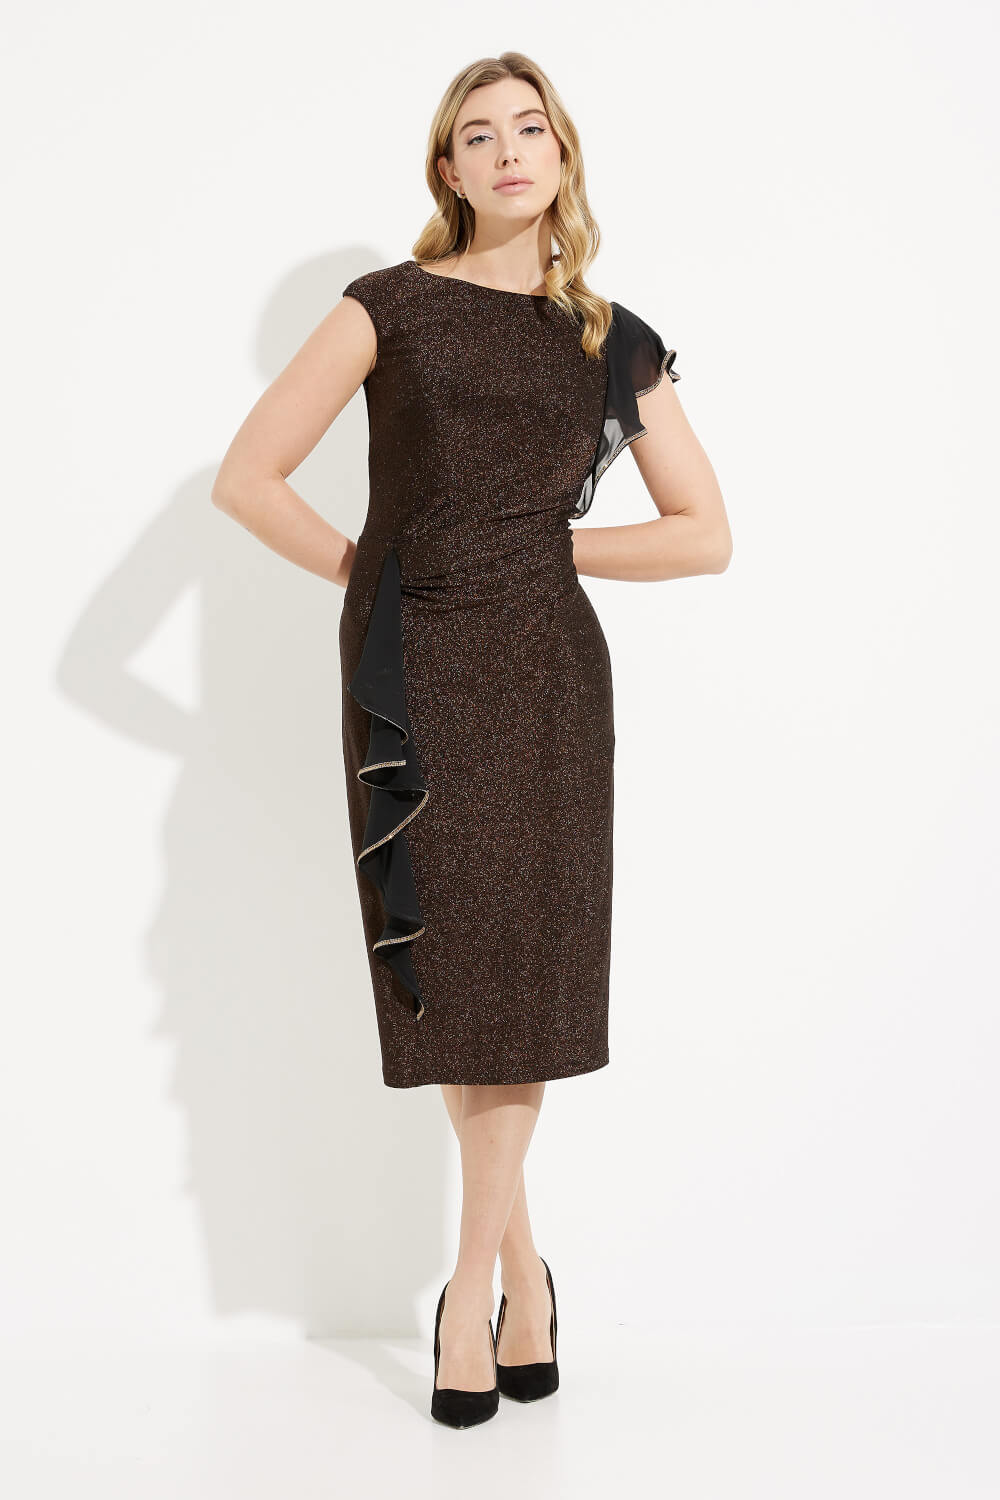 Ruffle Shimmer Dress Style 233775. Black/gold